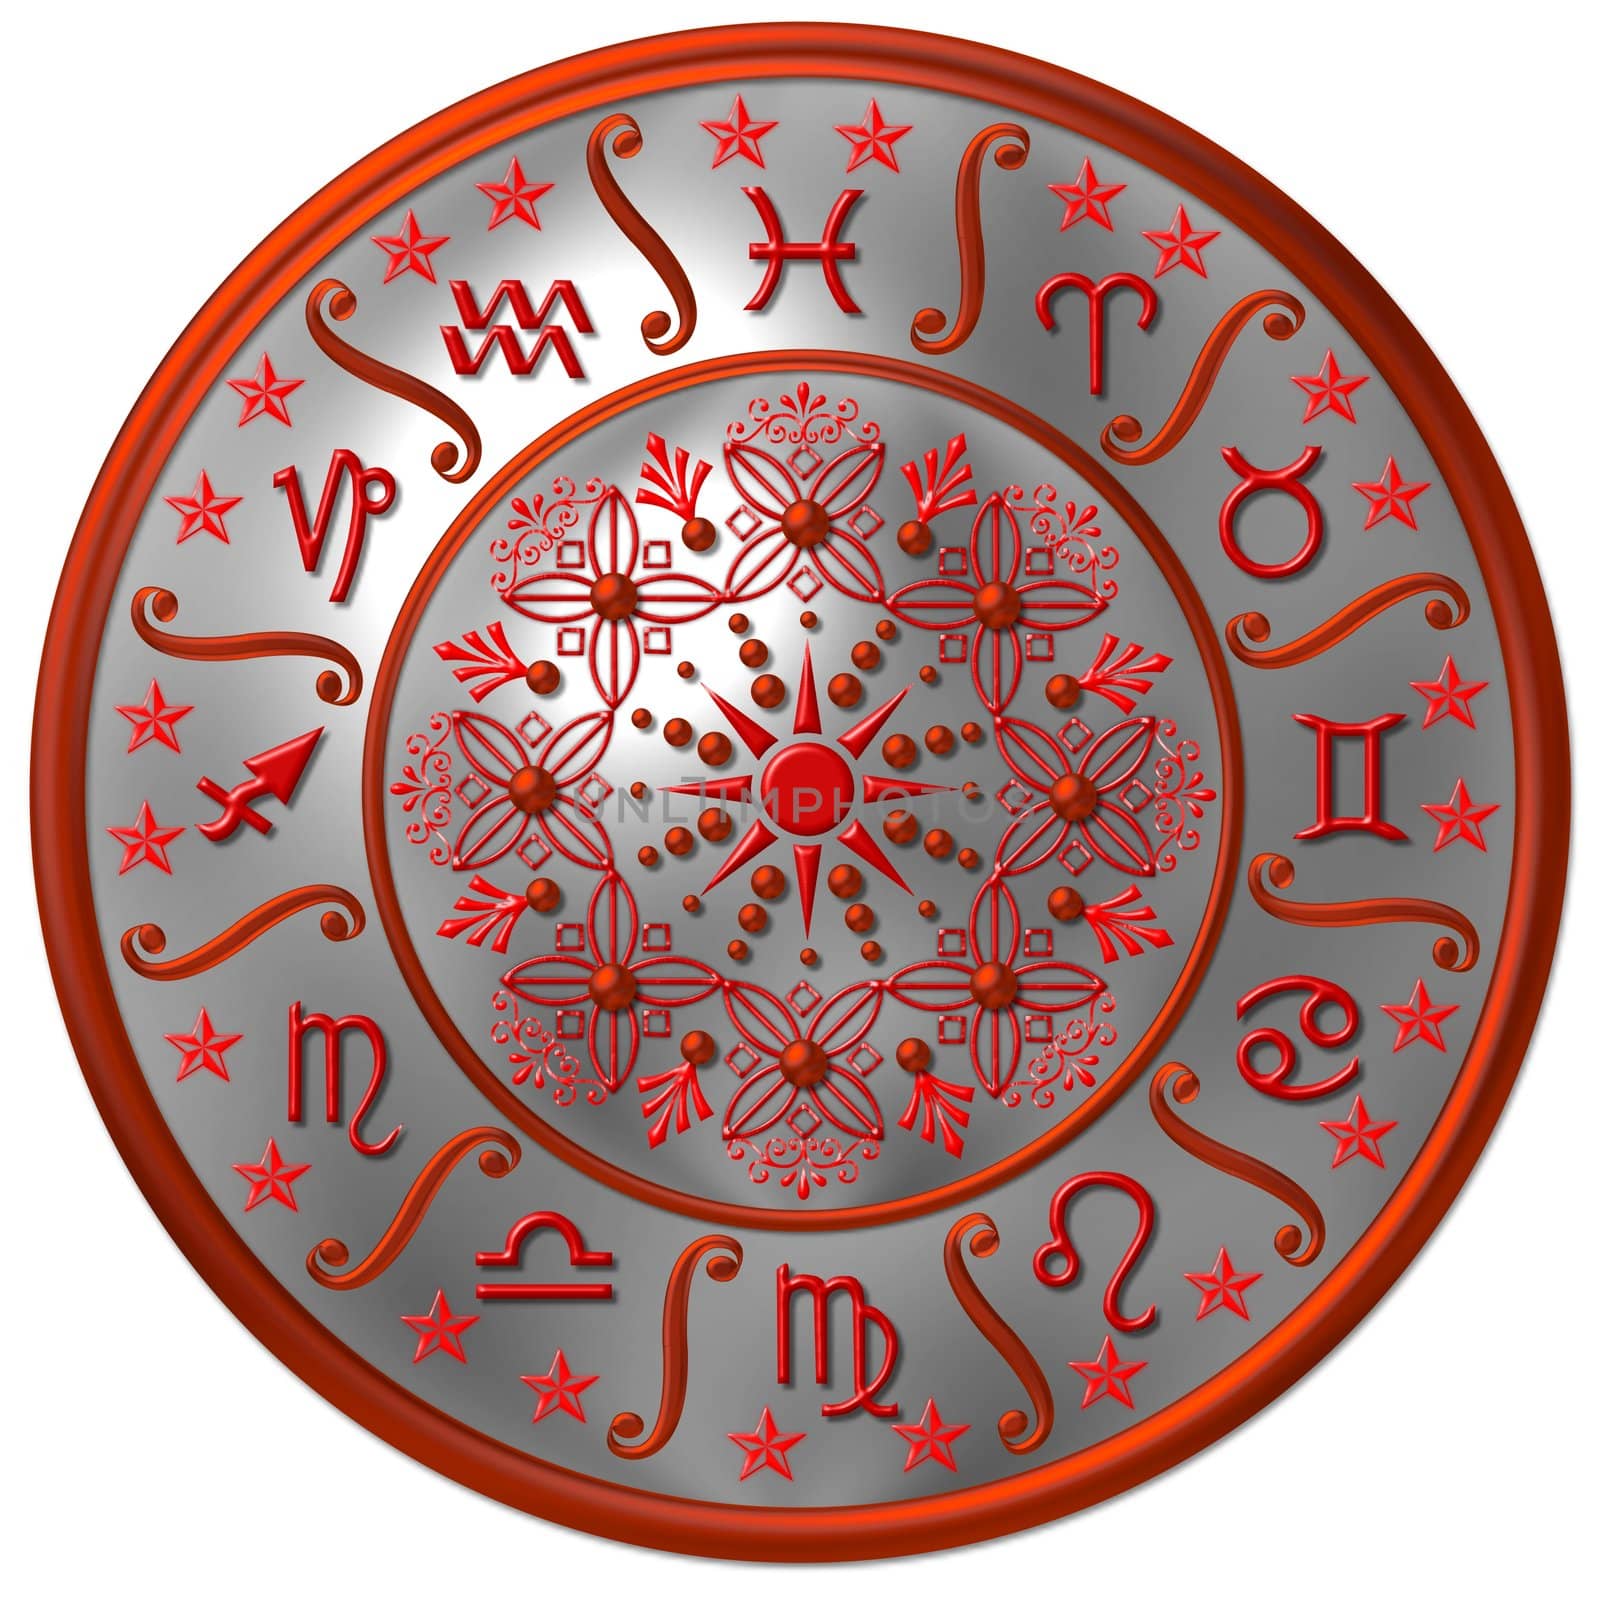 silver - red zodiac sign